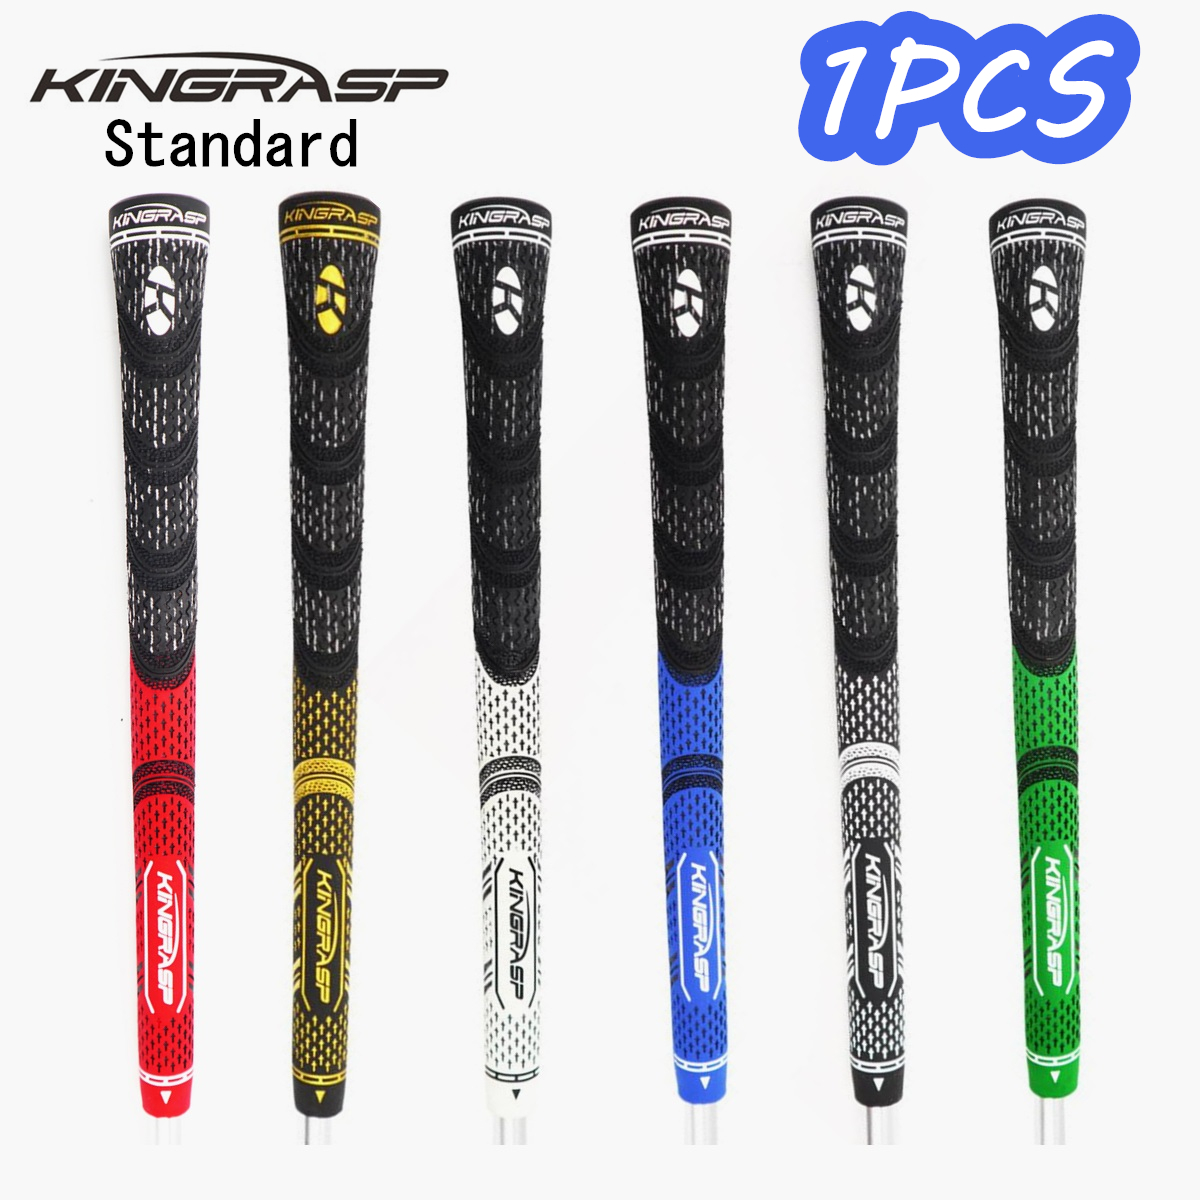 Kingrasp-Golf-Grip-Multicolor-Compound-Golf-Grips-Anti-Slip-Standard-Grip-1549488-1